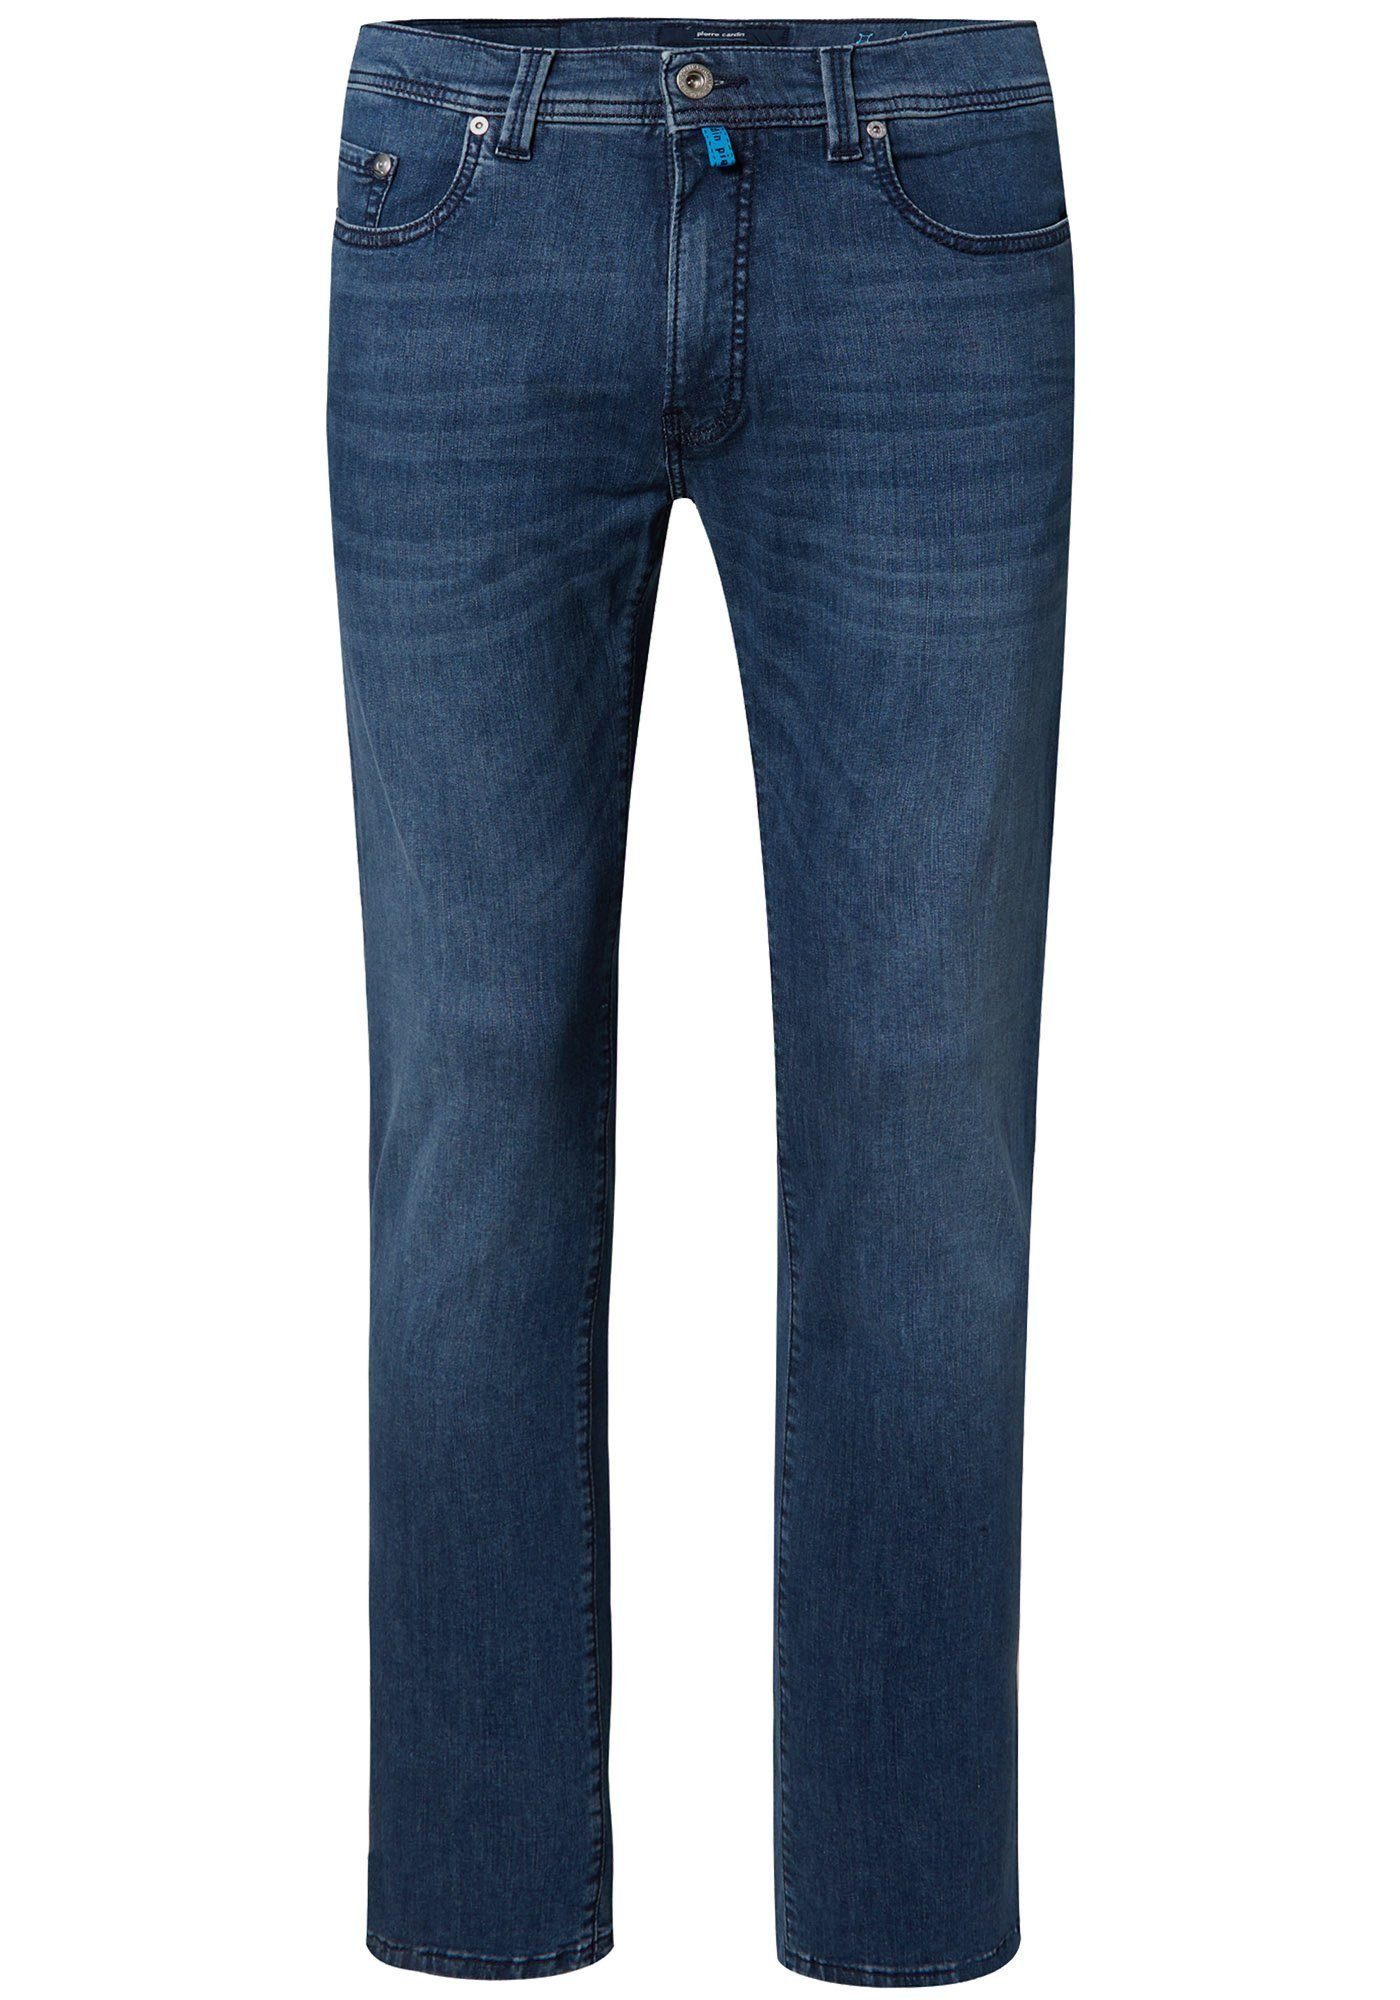 Organic Pierre Futureflex Cardin Used Jeans Cotton Tapered Buffies 5-Pocket-Jeans Lyon Blue Fit